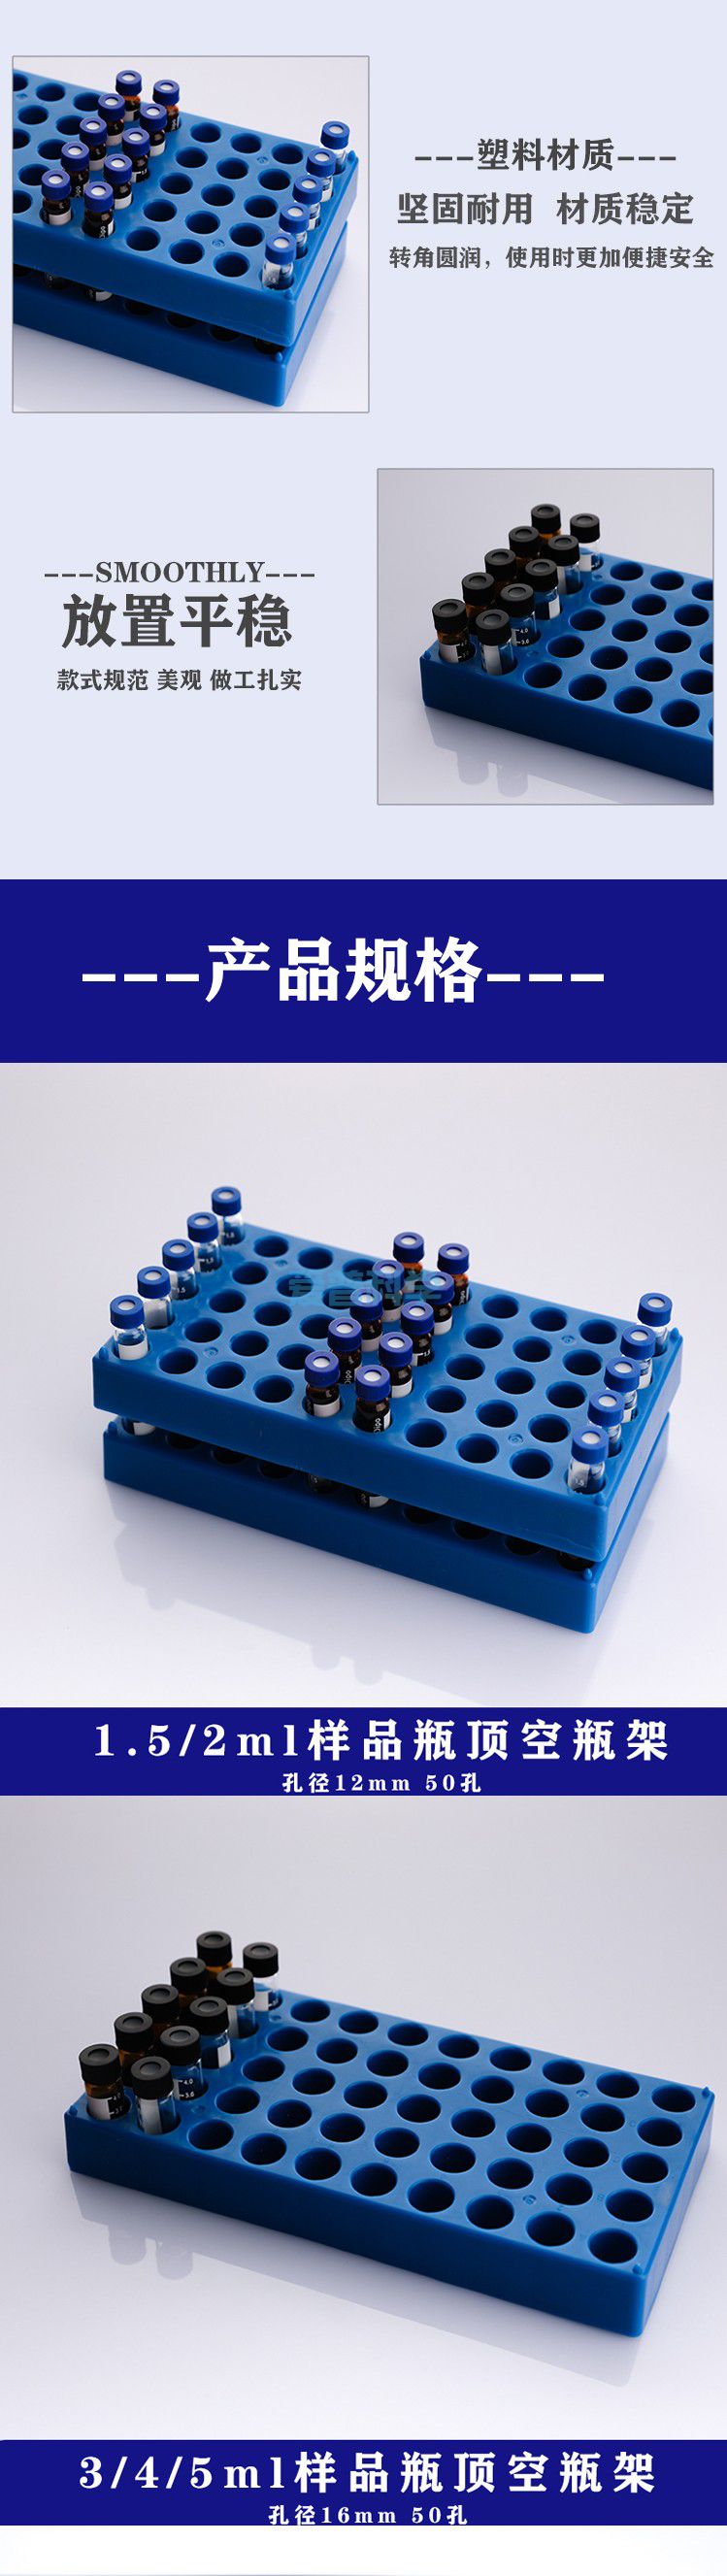 1.5ml/2ml塑料进样瓶架/冻存管架,50孔,蓝色(图1)